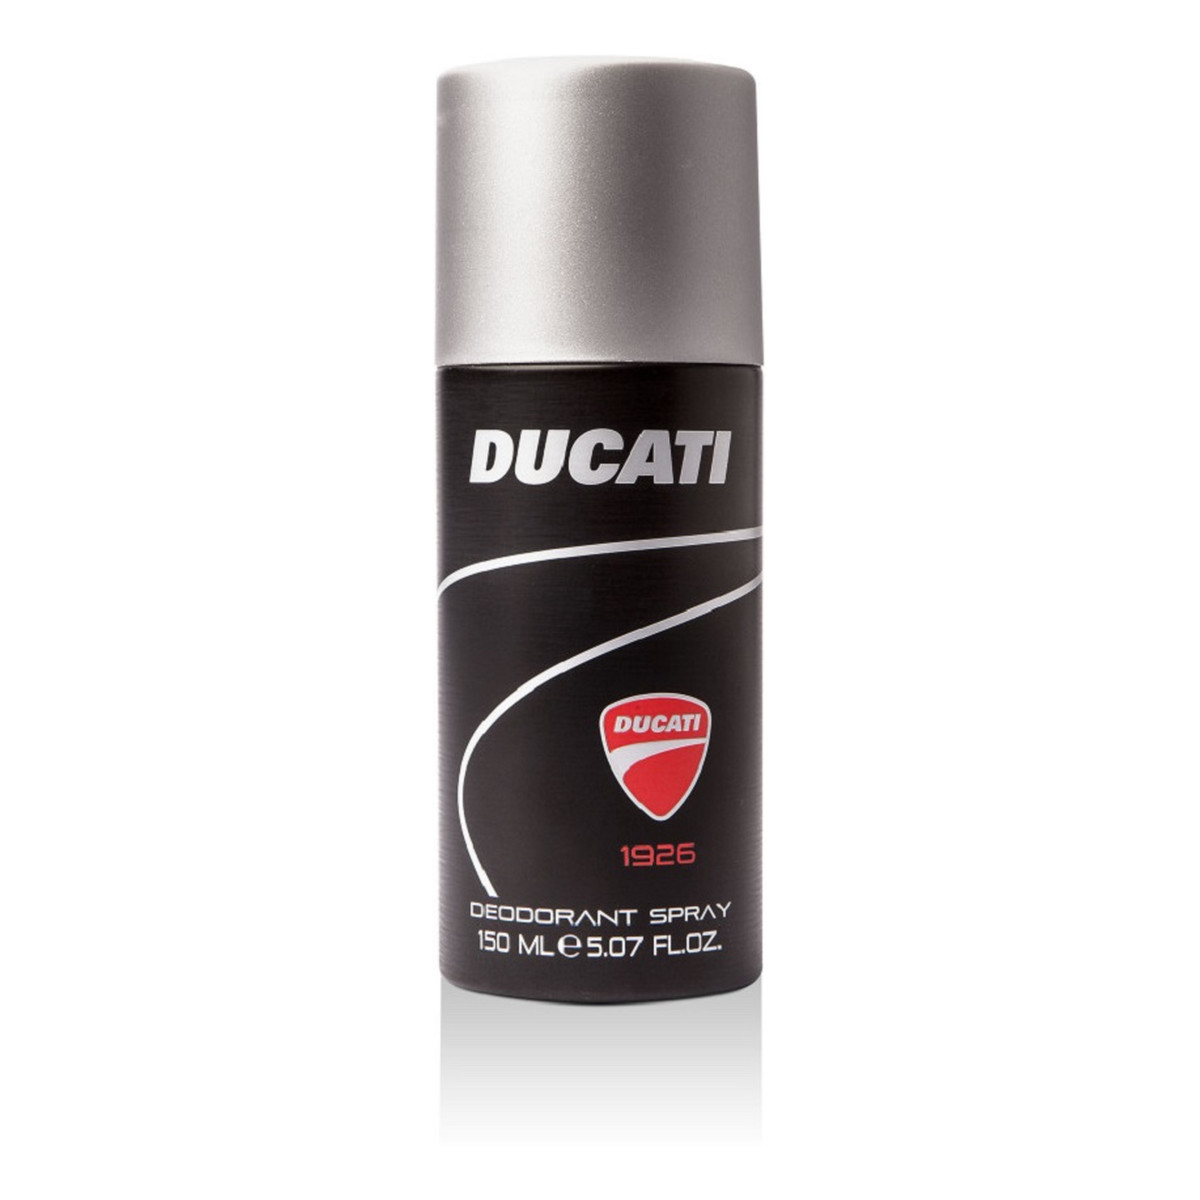 Ducati Men's deodorant, fragrances Men, Dezodorant 1926 150ml